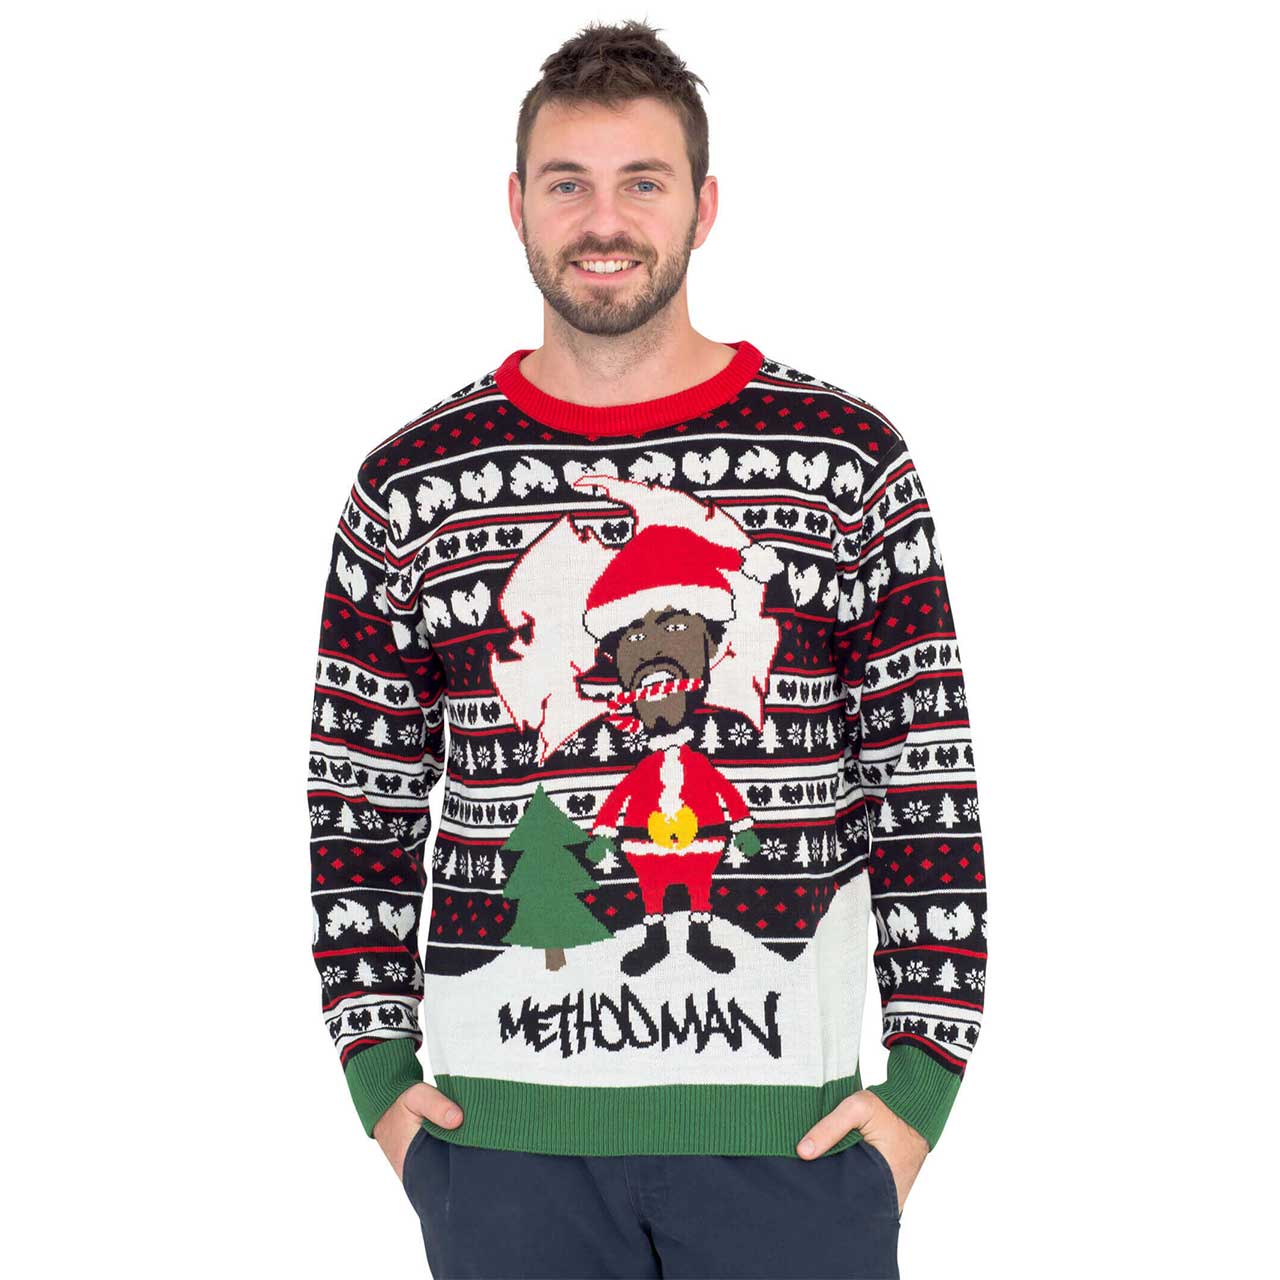 Method Man Ugly Christmas Sweater,Ugly Christmas Sweaters | Funny Xmas Sweaters for Men and Women